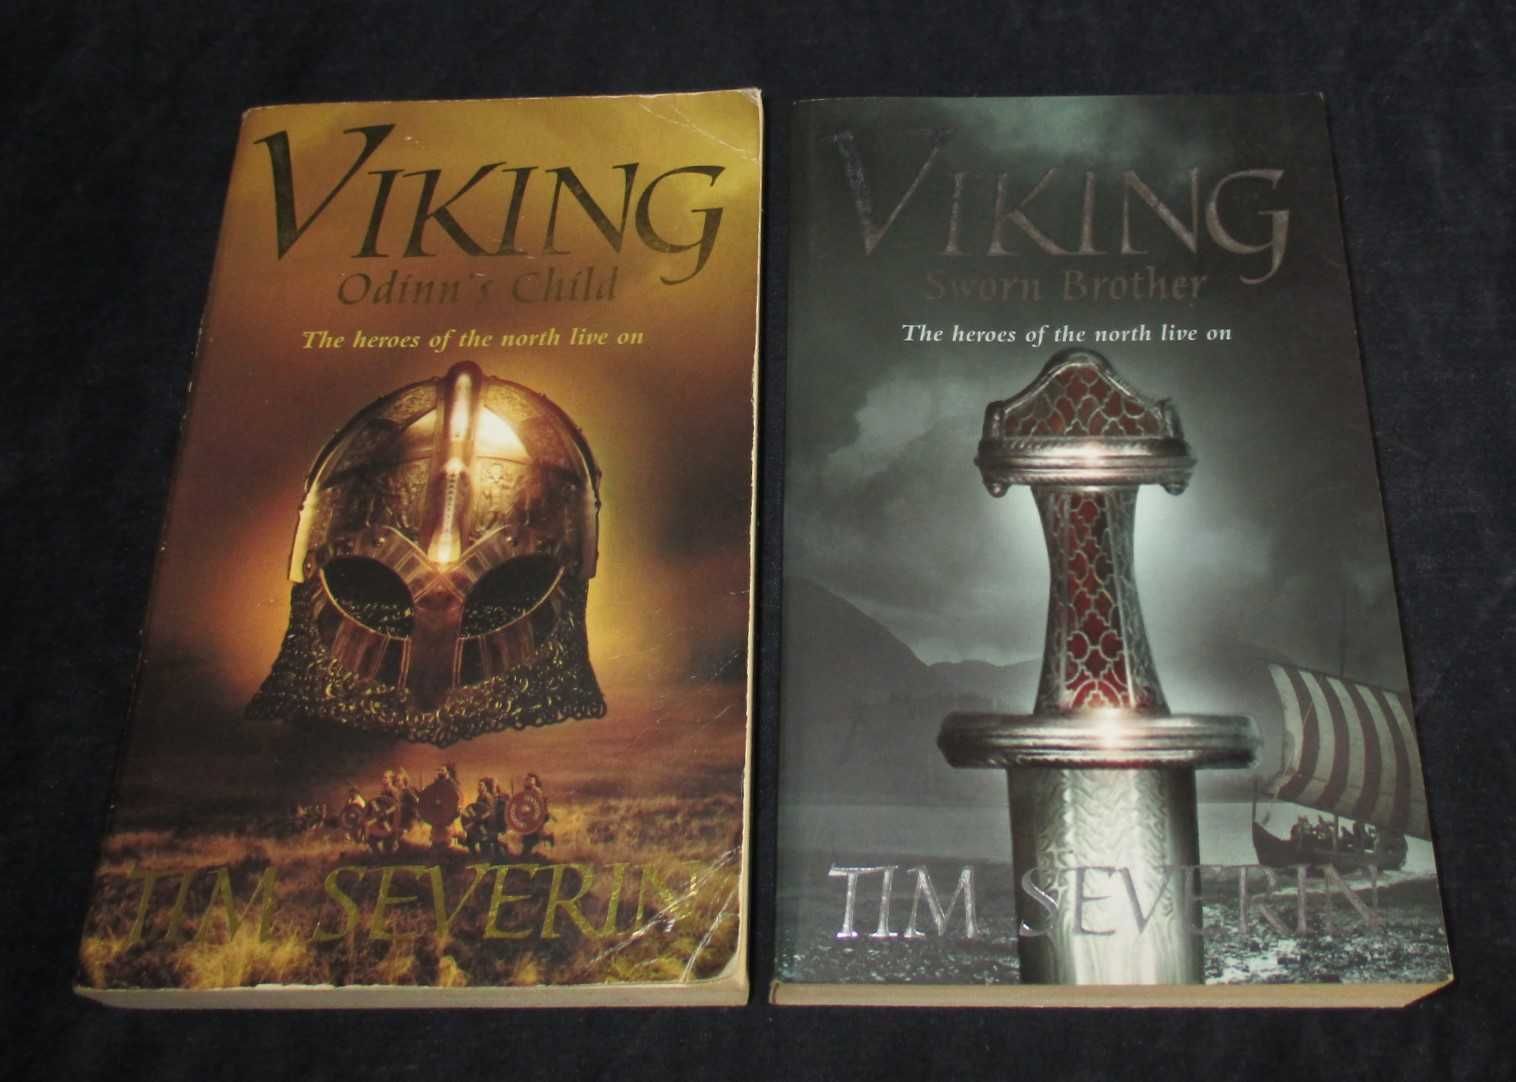 Livros Viking Odinn's Child e Sworn Brother Tim Severin